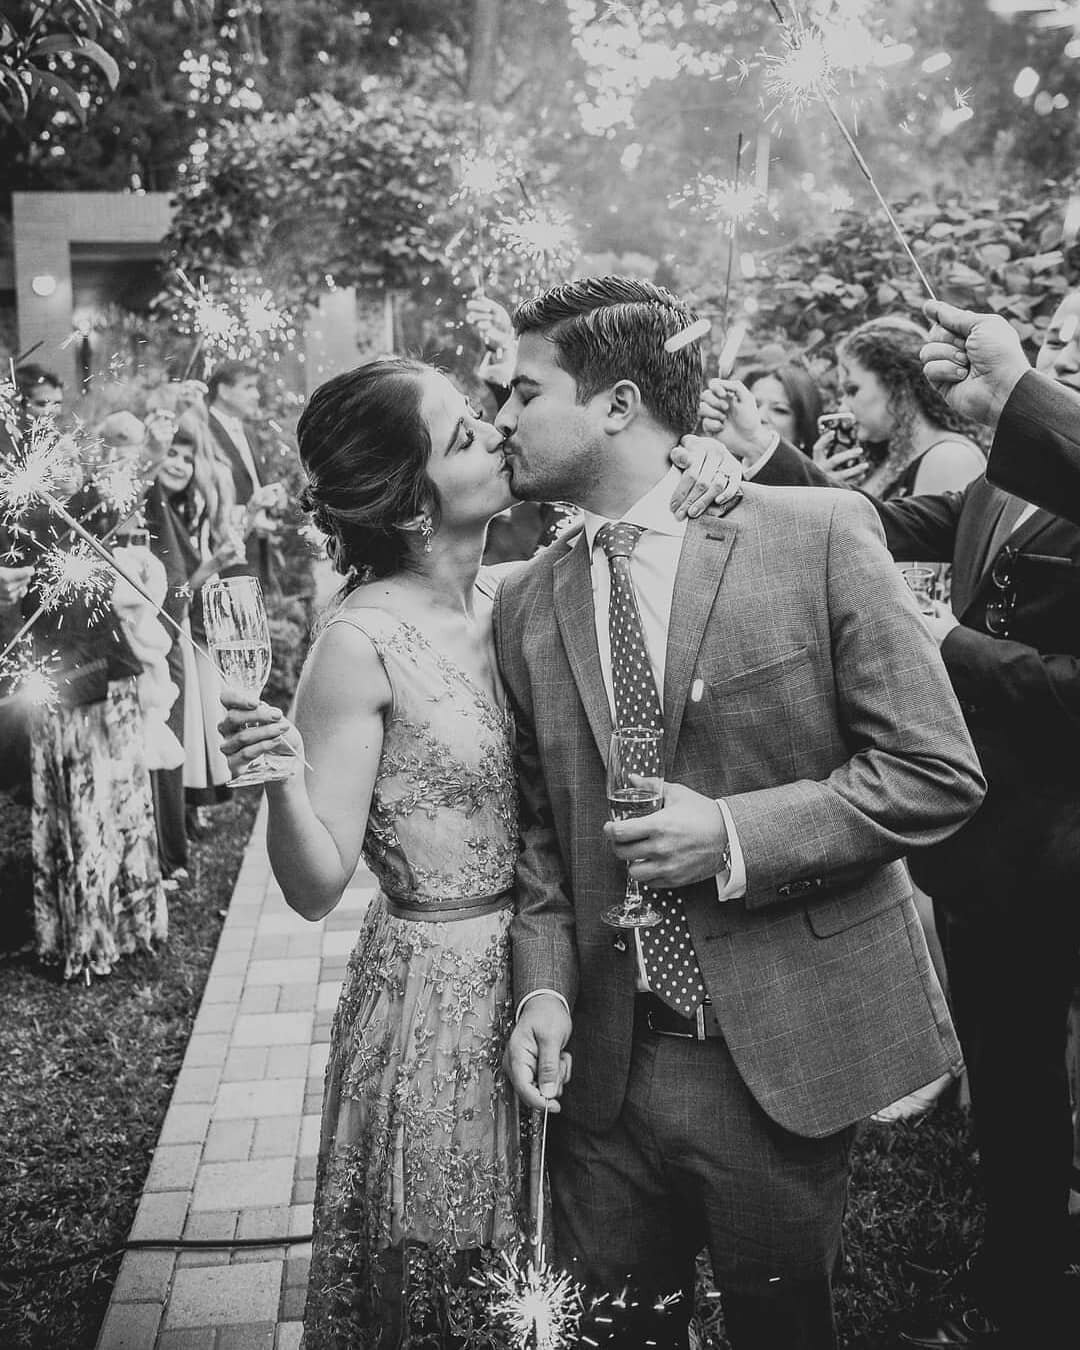 Make this feeling last forever.
.
#weddingphotographerguatemala #guatemalaweddingphotographer #weddingsguatemala #weddingday #bodasguatemala #destinationweddingguatemala #destinationweddingphotographer #guatemalaweddings